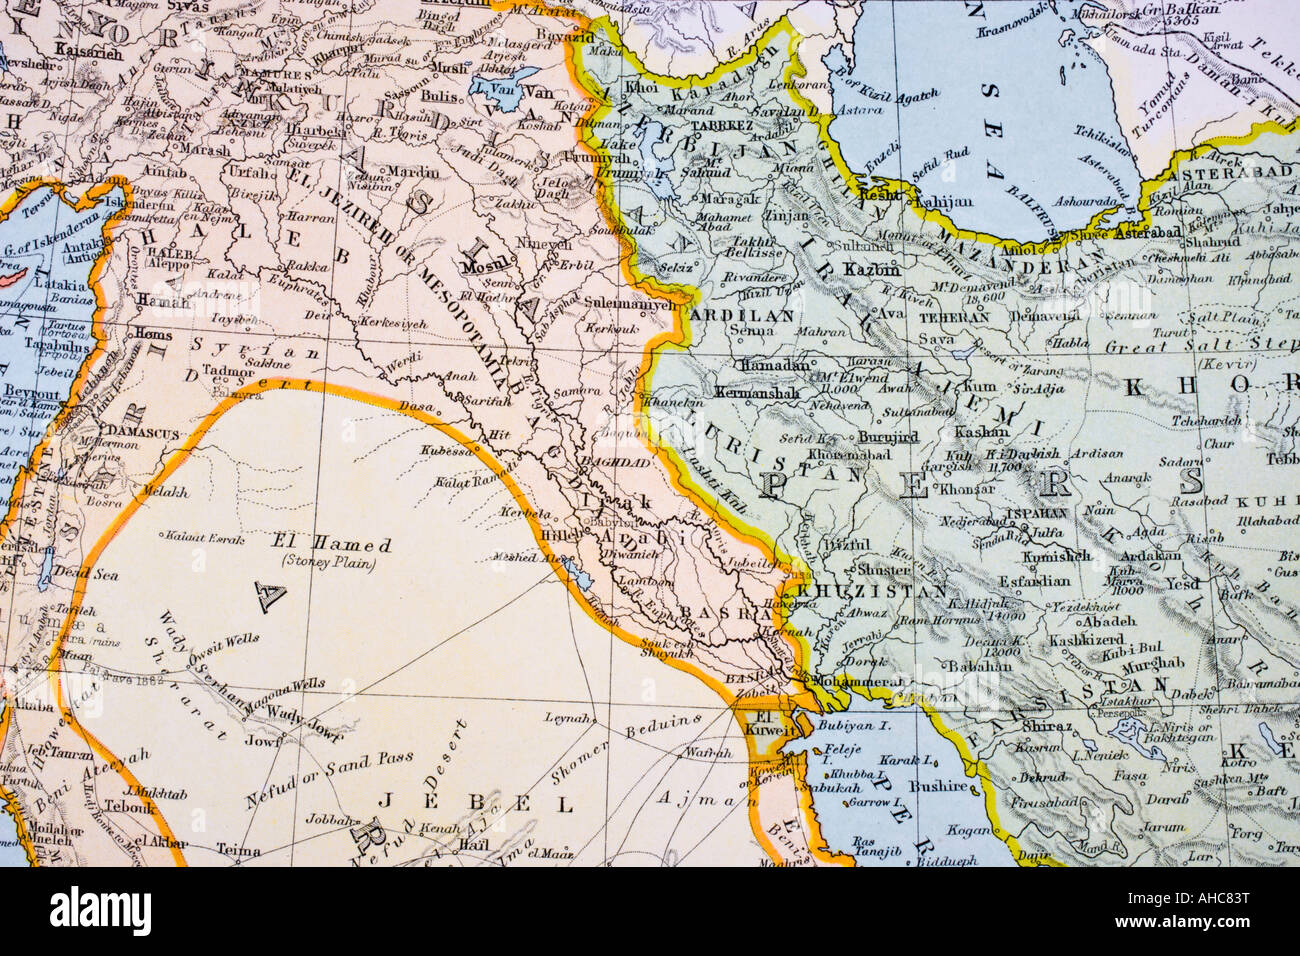 Map of kurdistan hi-res stock photography and images - Alamy